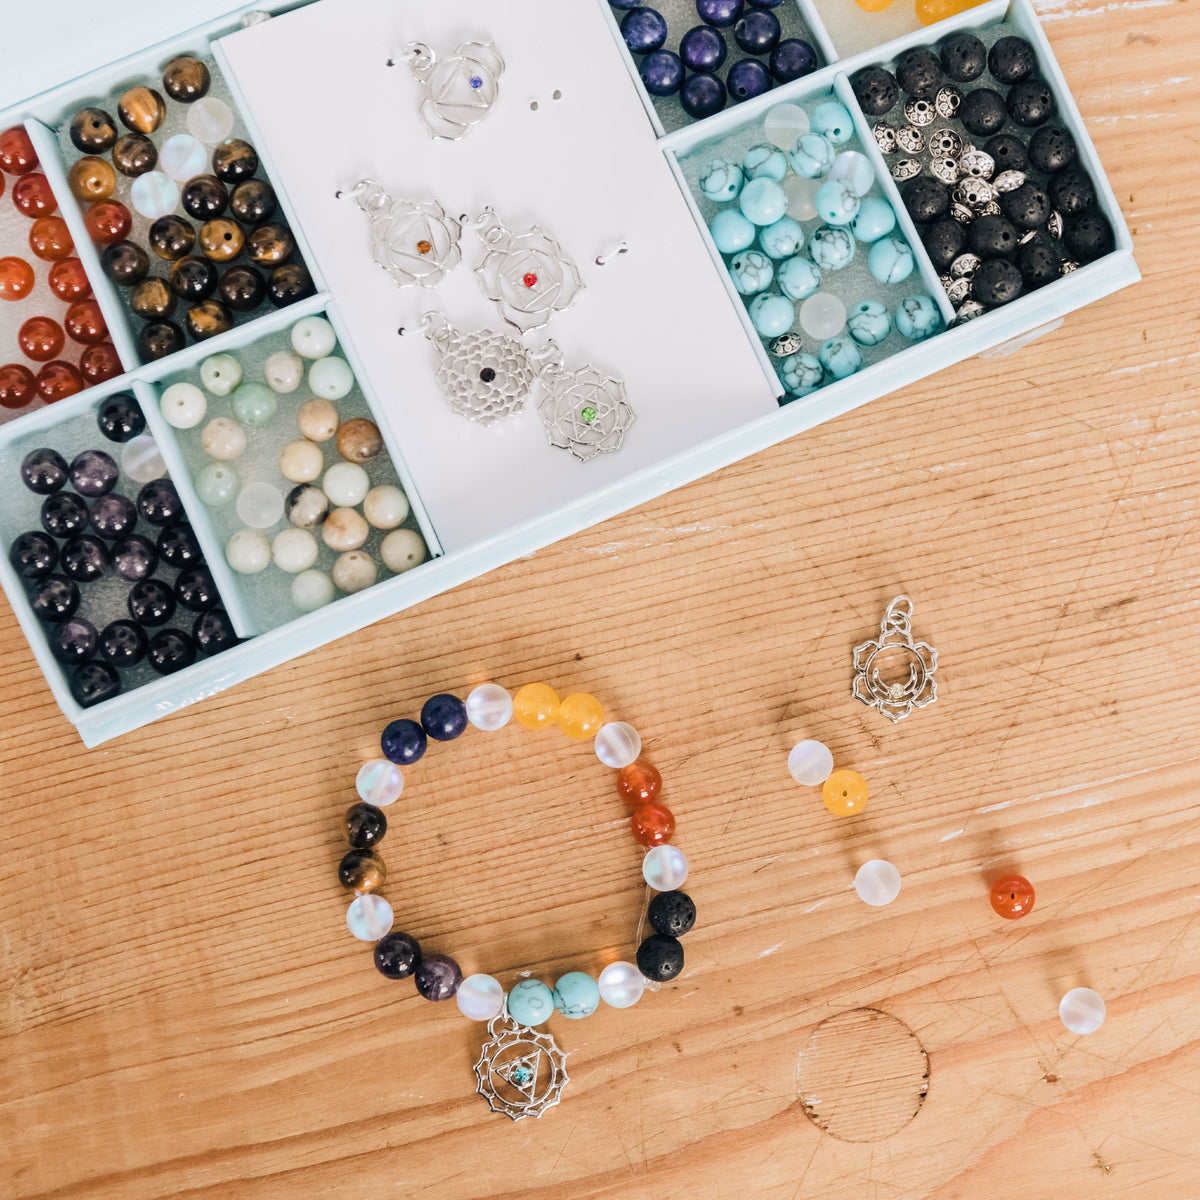 Gpoty Charm Bracelet Making Kit,DIY Bag and Bracelet Making Kit,Jewellery Making Kit Colorful Beads Making Kit Jewellery Craft Kit Creative Jewelry